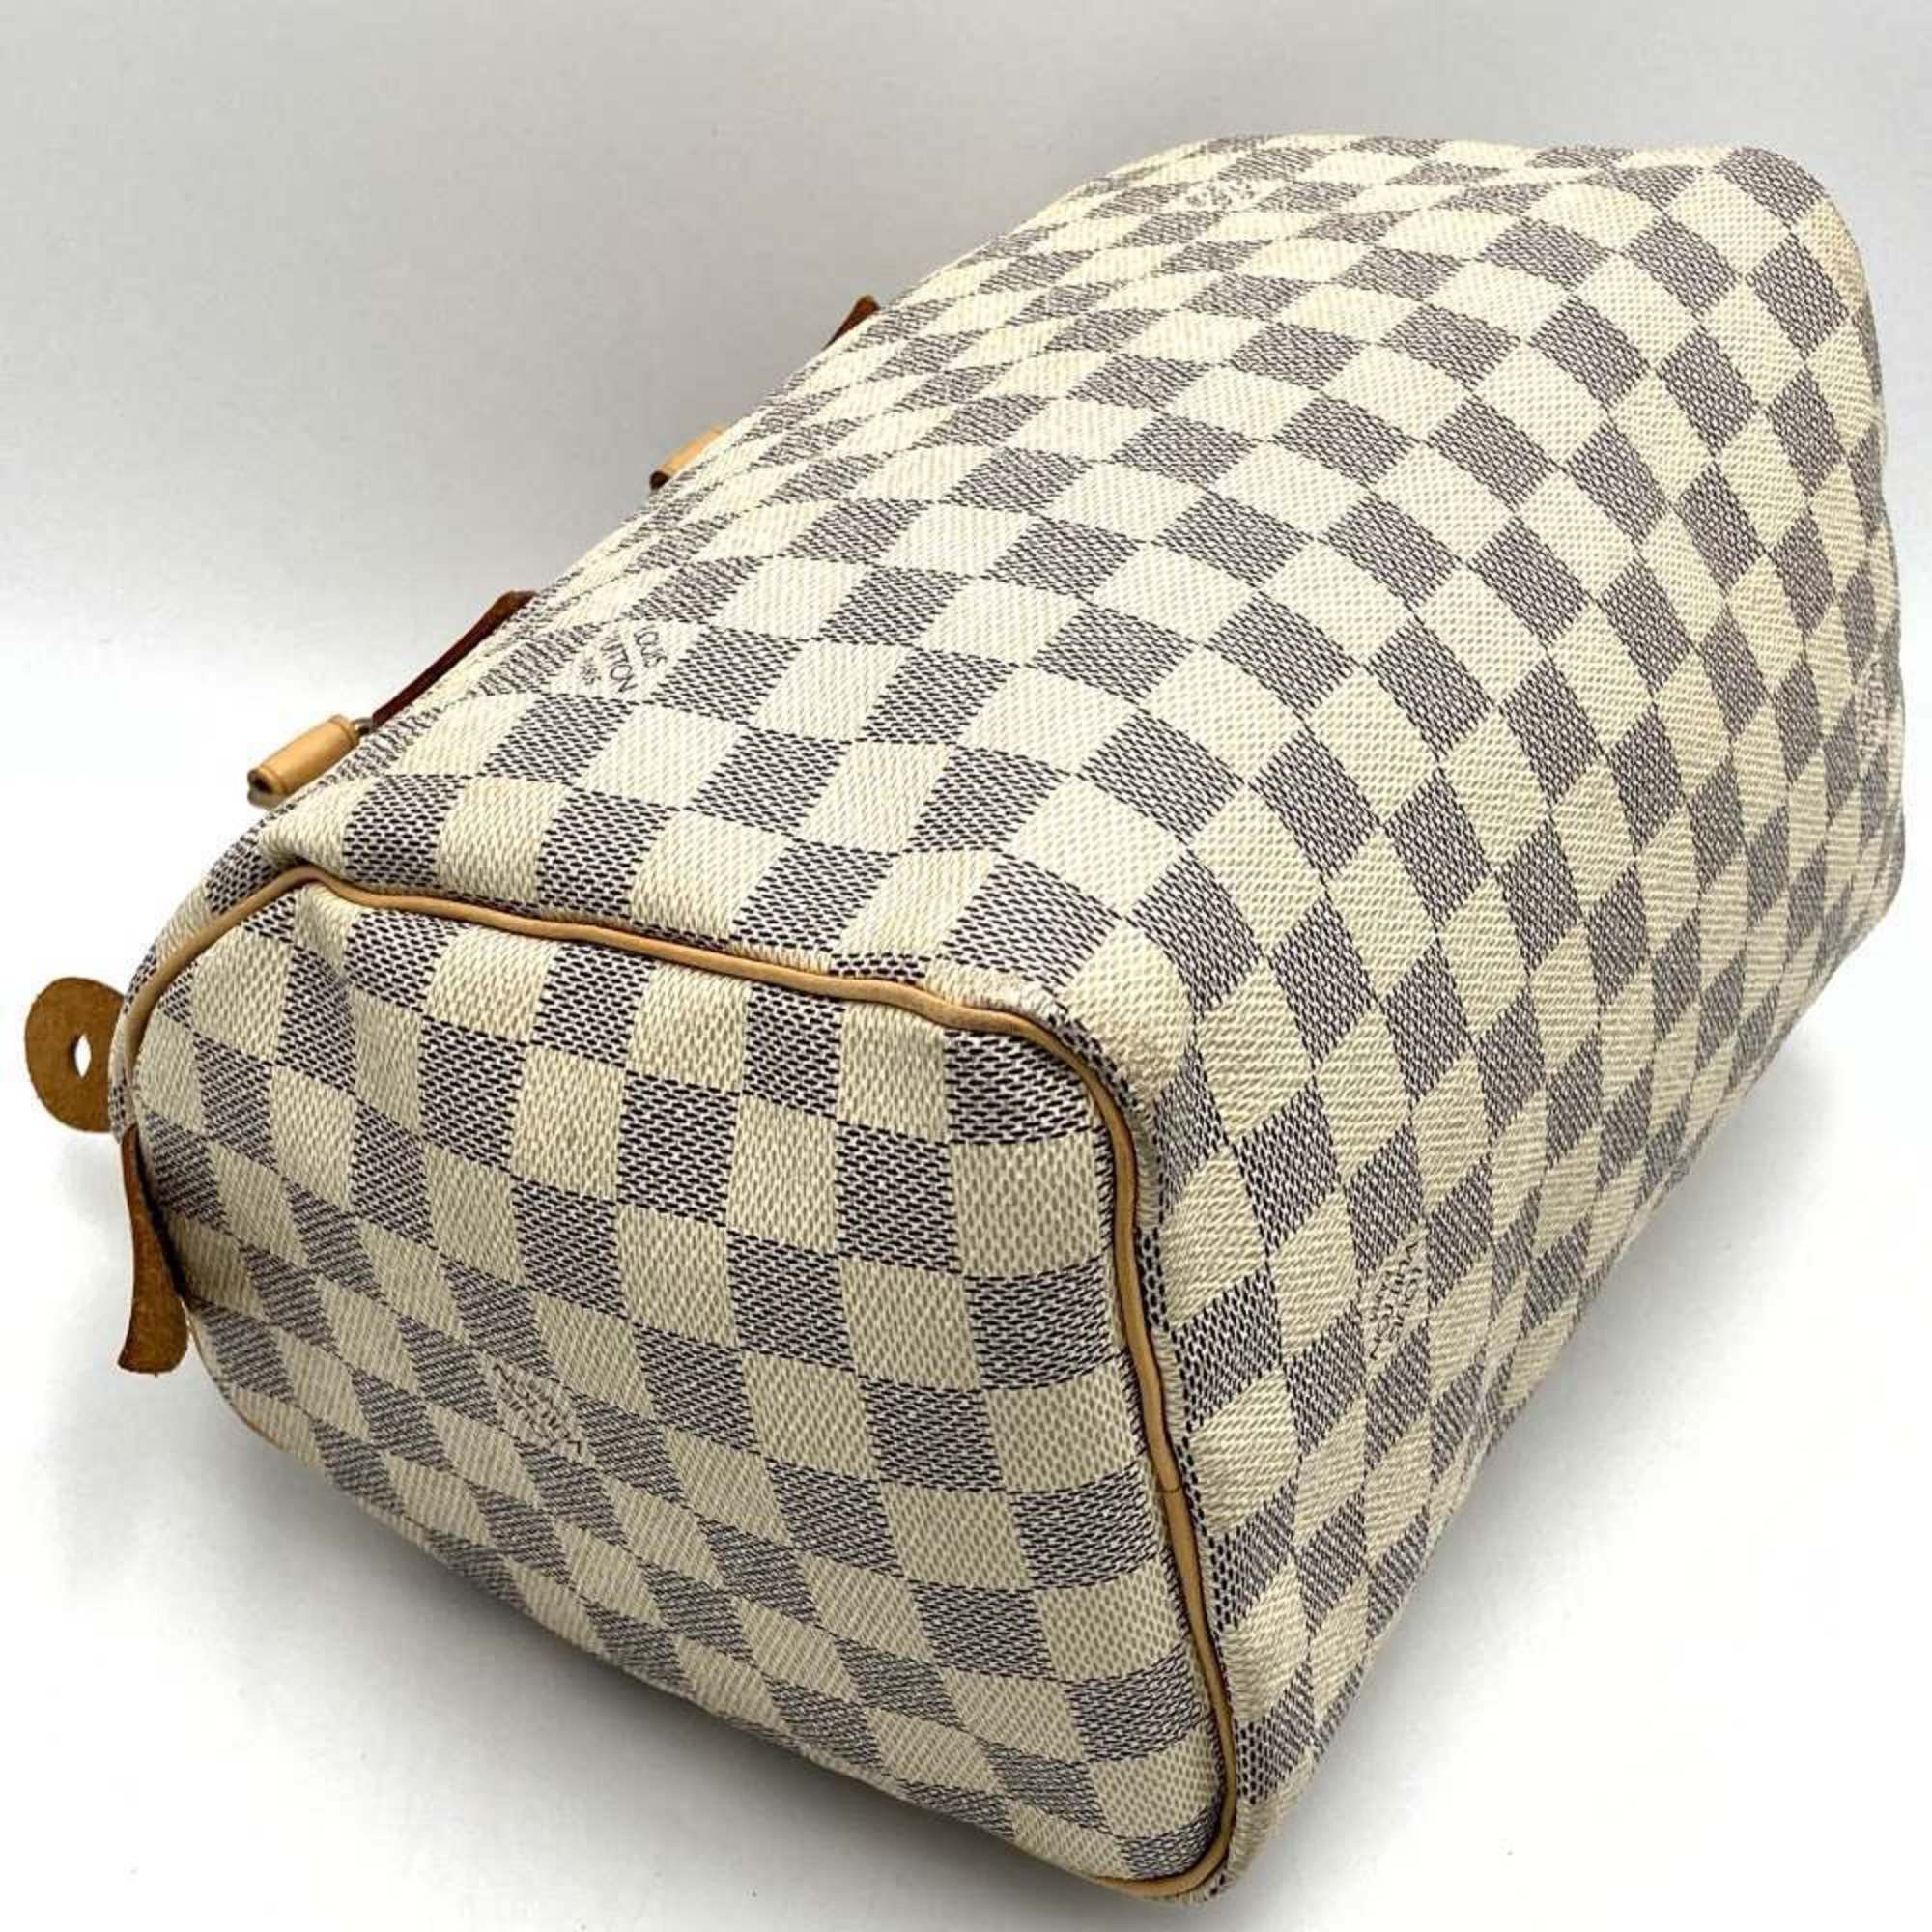 Louis Vuitton N41371 Damier Azur Speedy 25 Handbag Ivory White LOUIS VUITTON